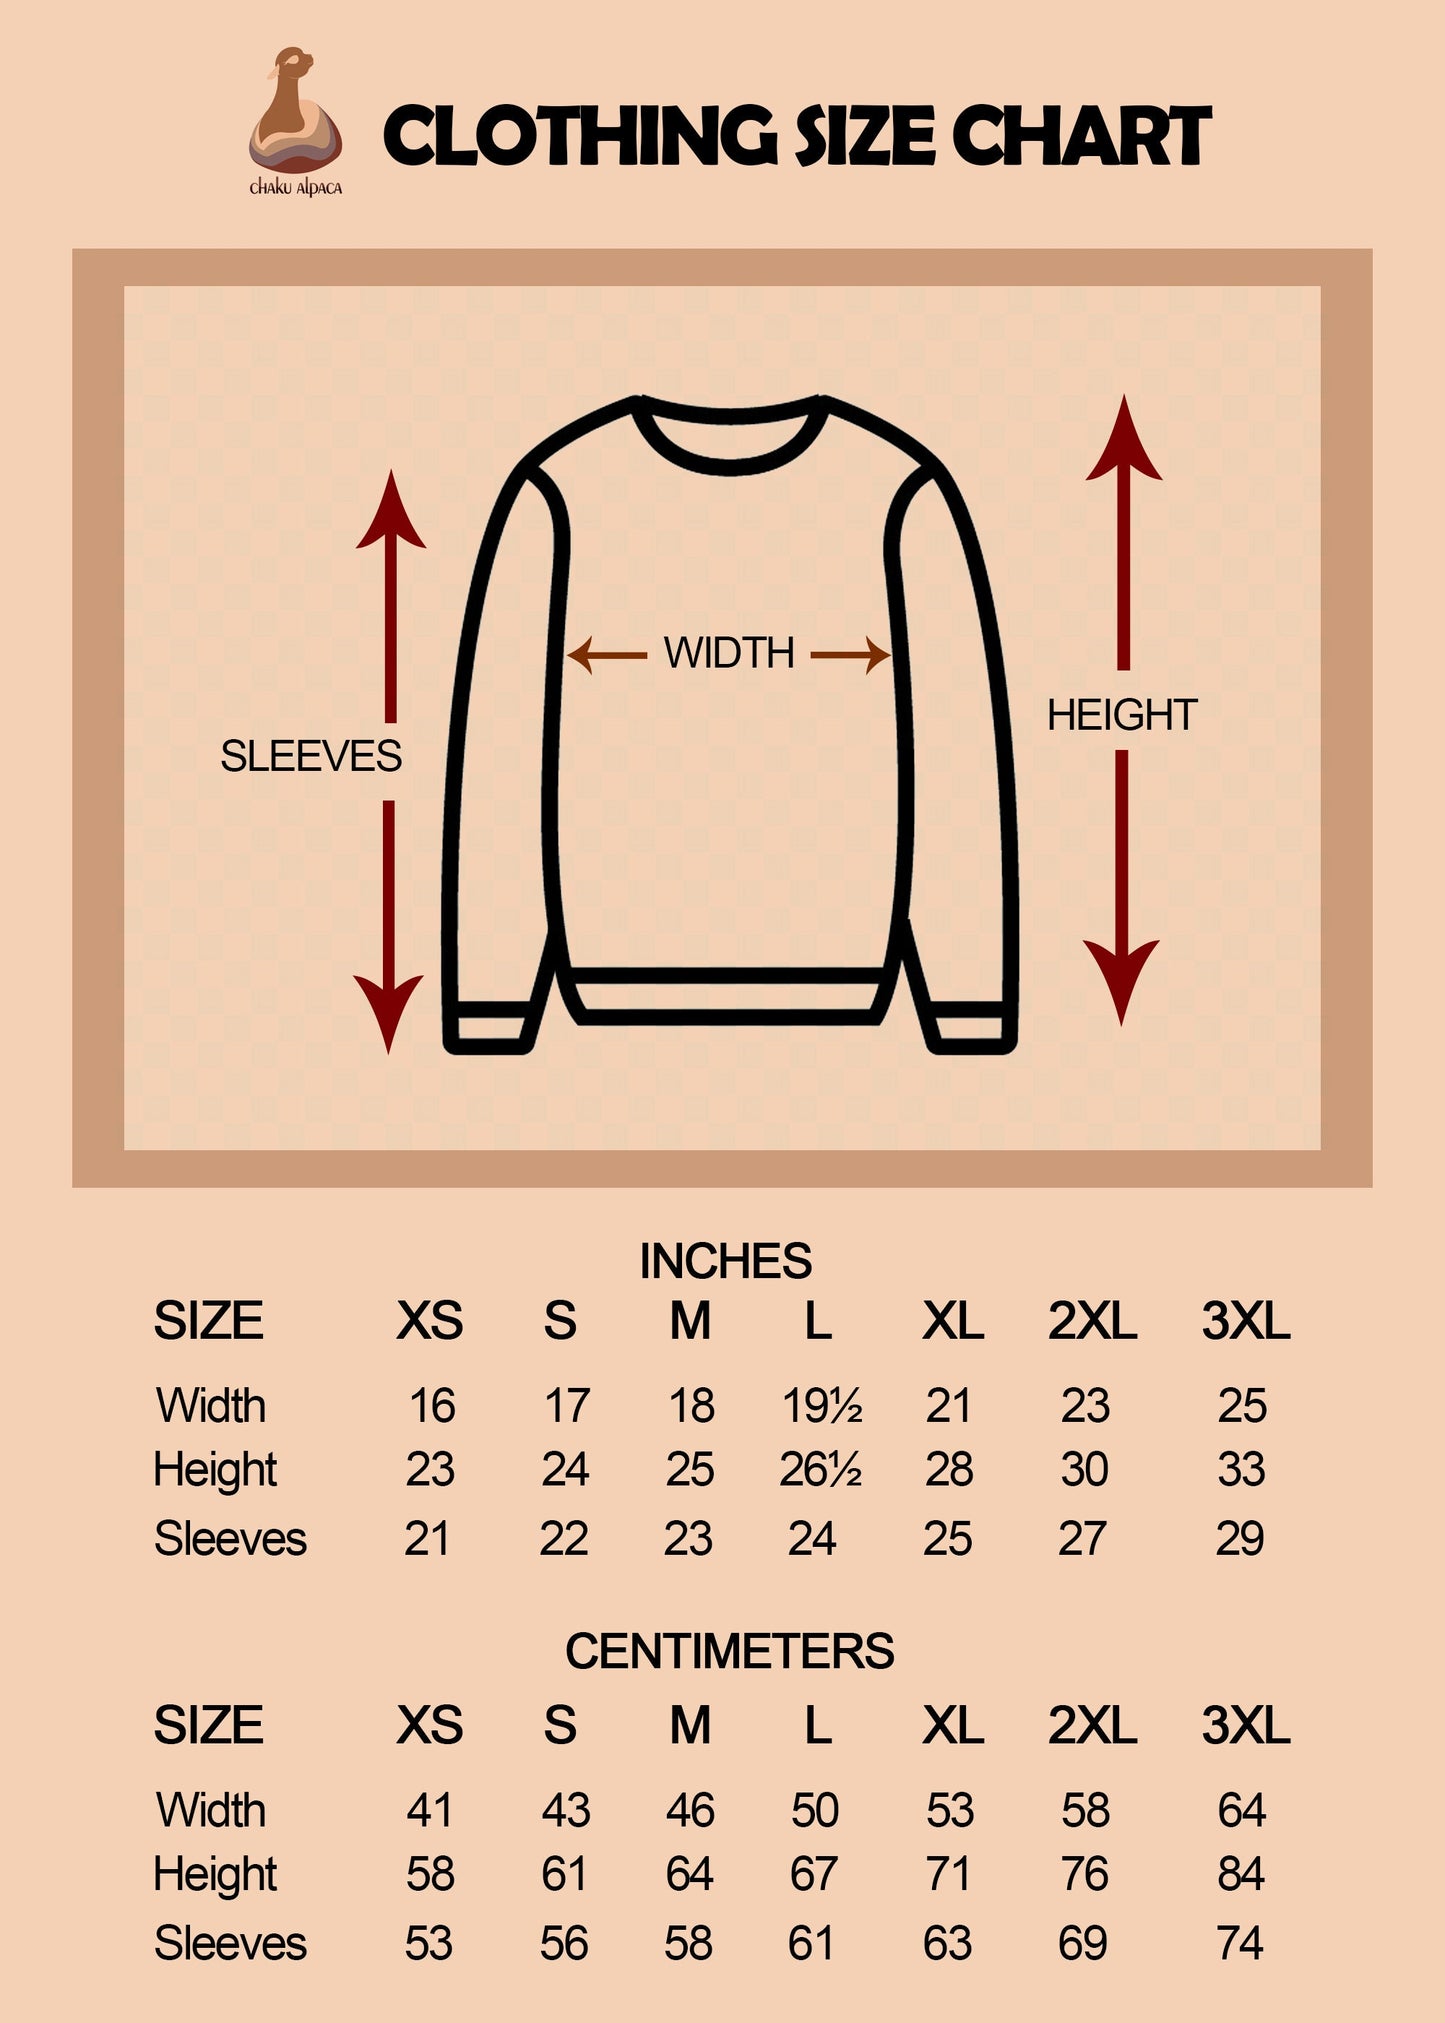 ALPACA SWEATER | Handcrafted Unisex Sweater Peruvian Design